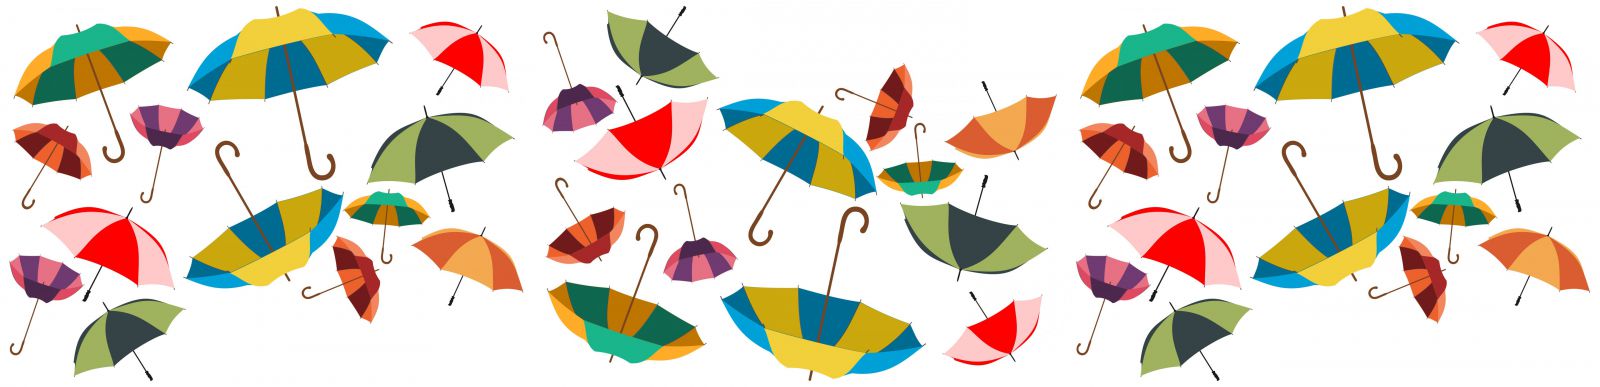 Colourful clip art umbrellas